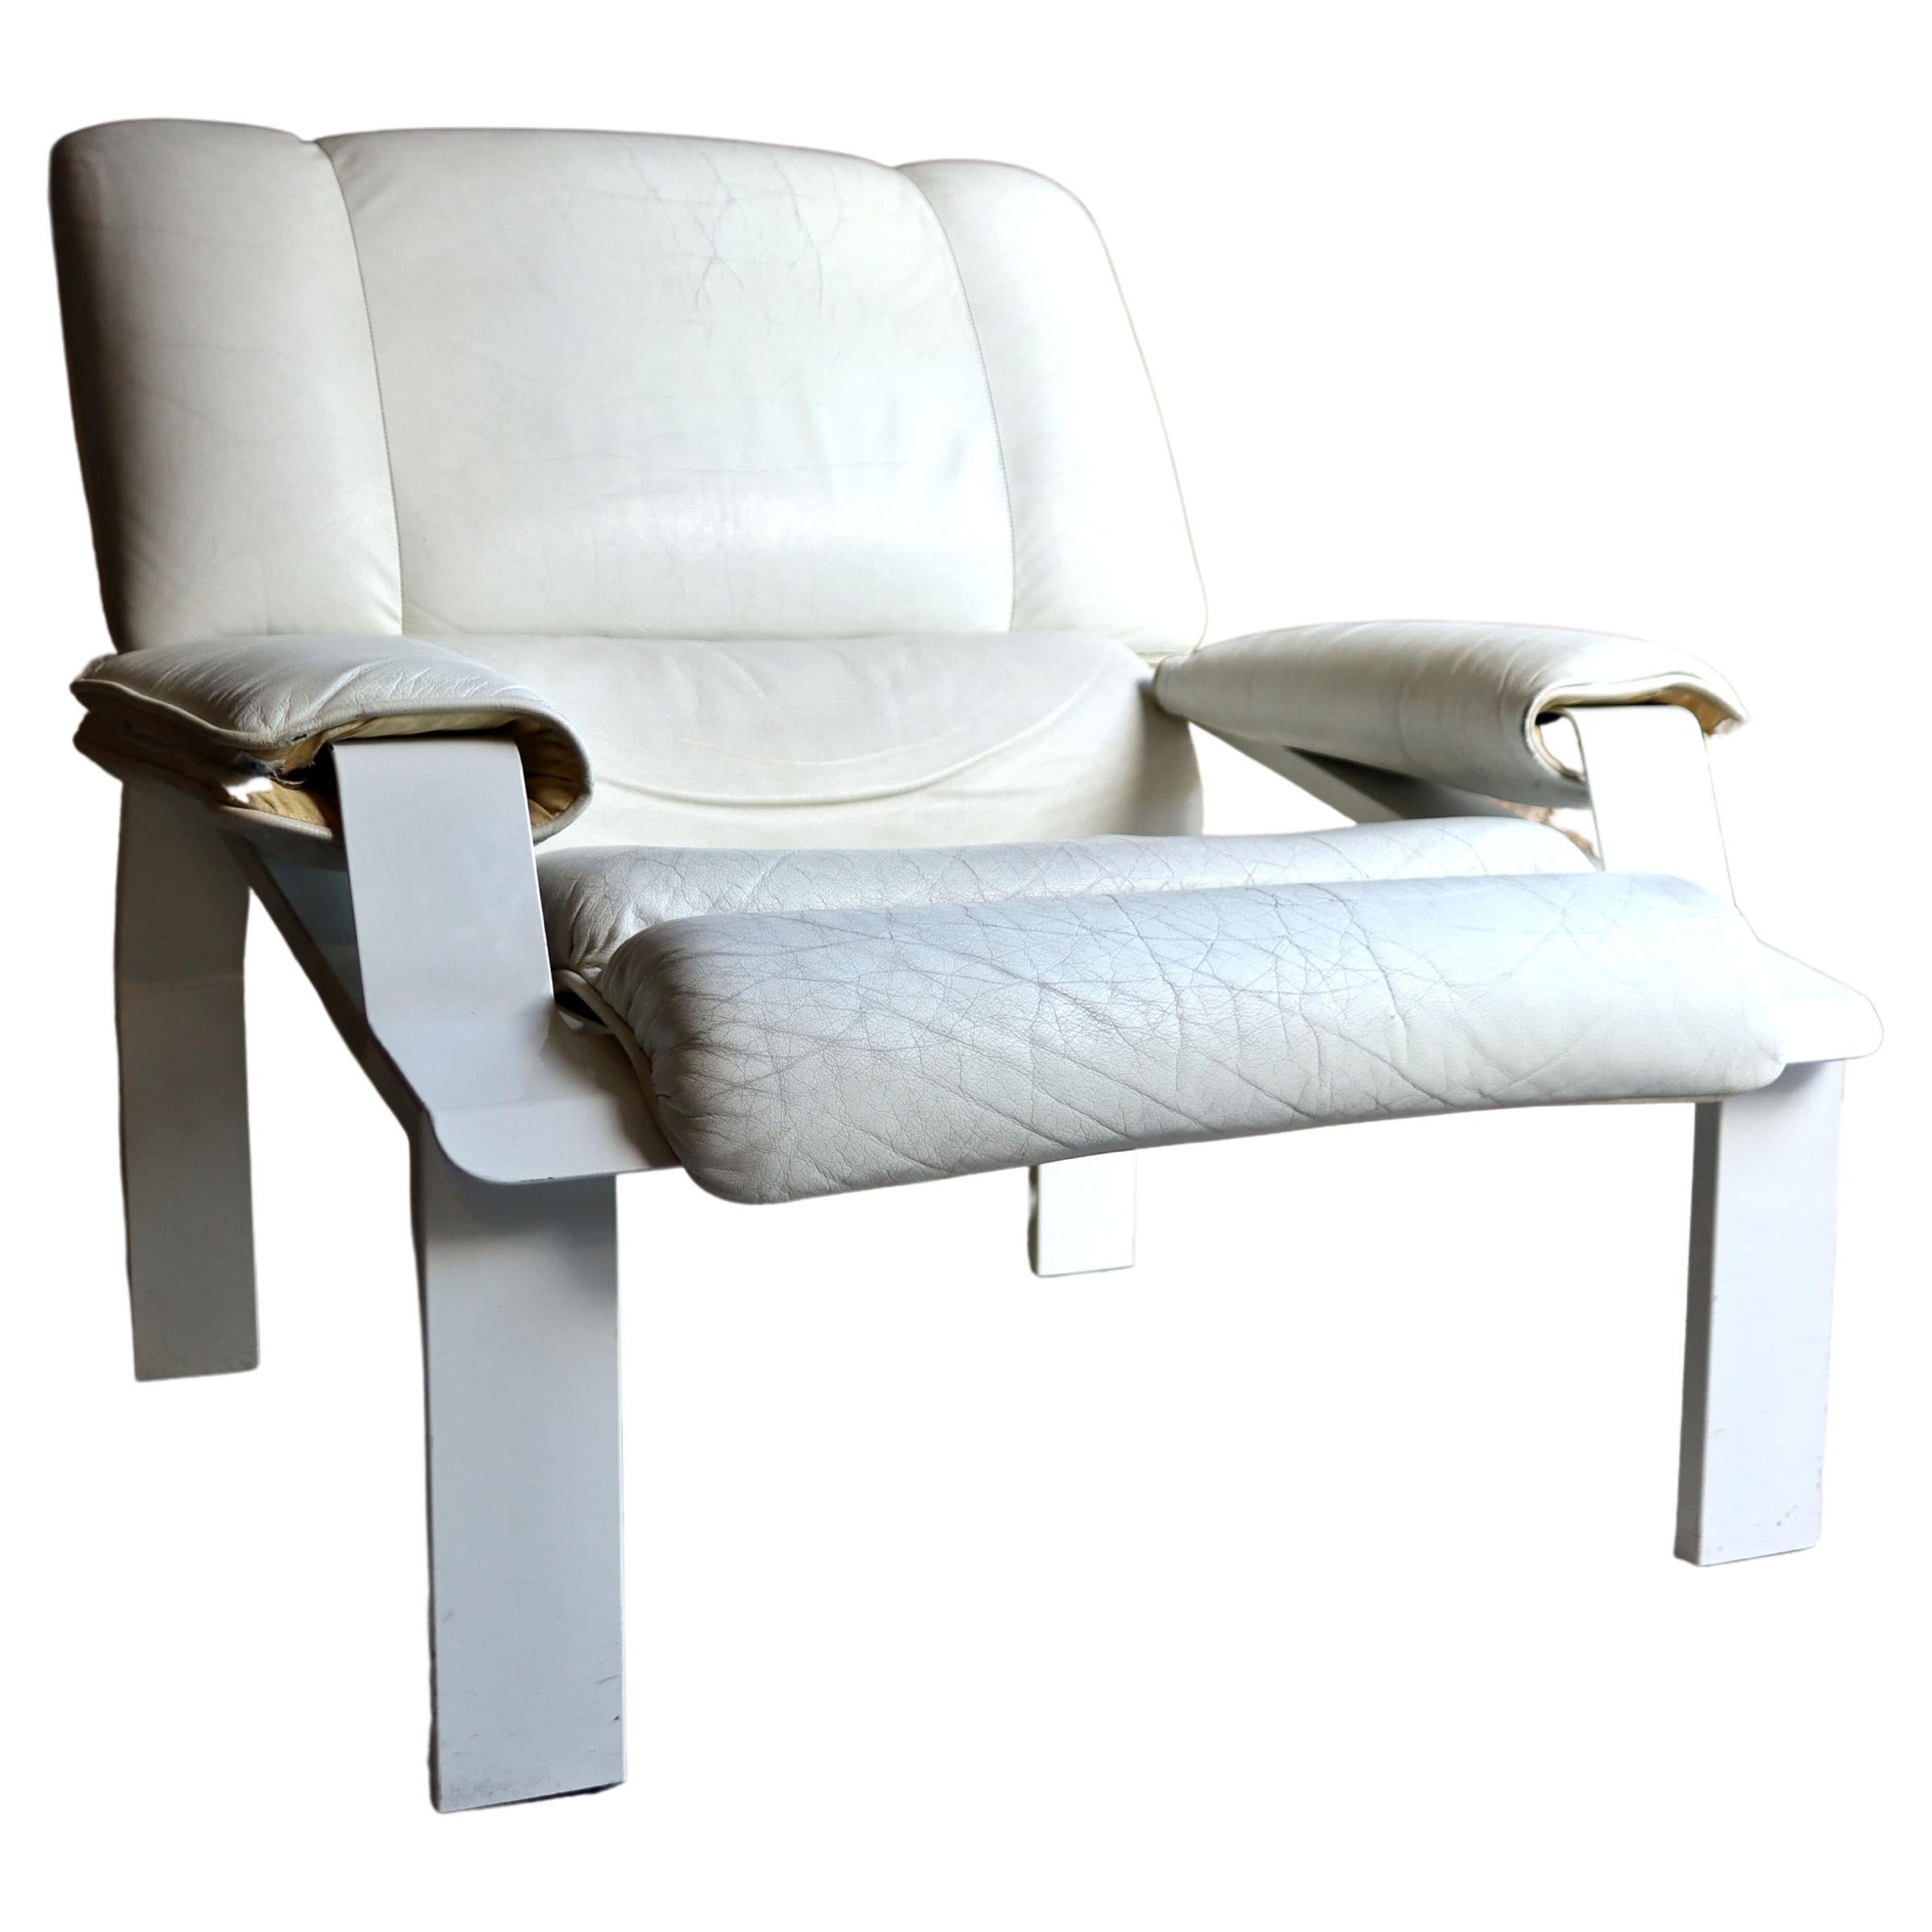 Joe Colombo – LEM chair – White Leather – Bieffeplast – Italy – 1960s For Sale